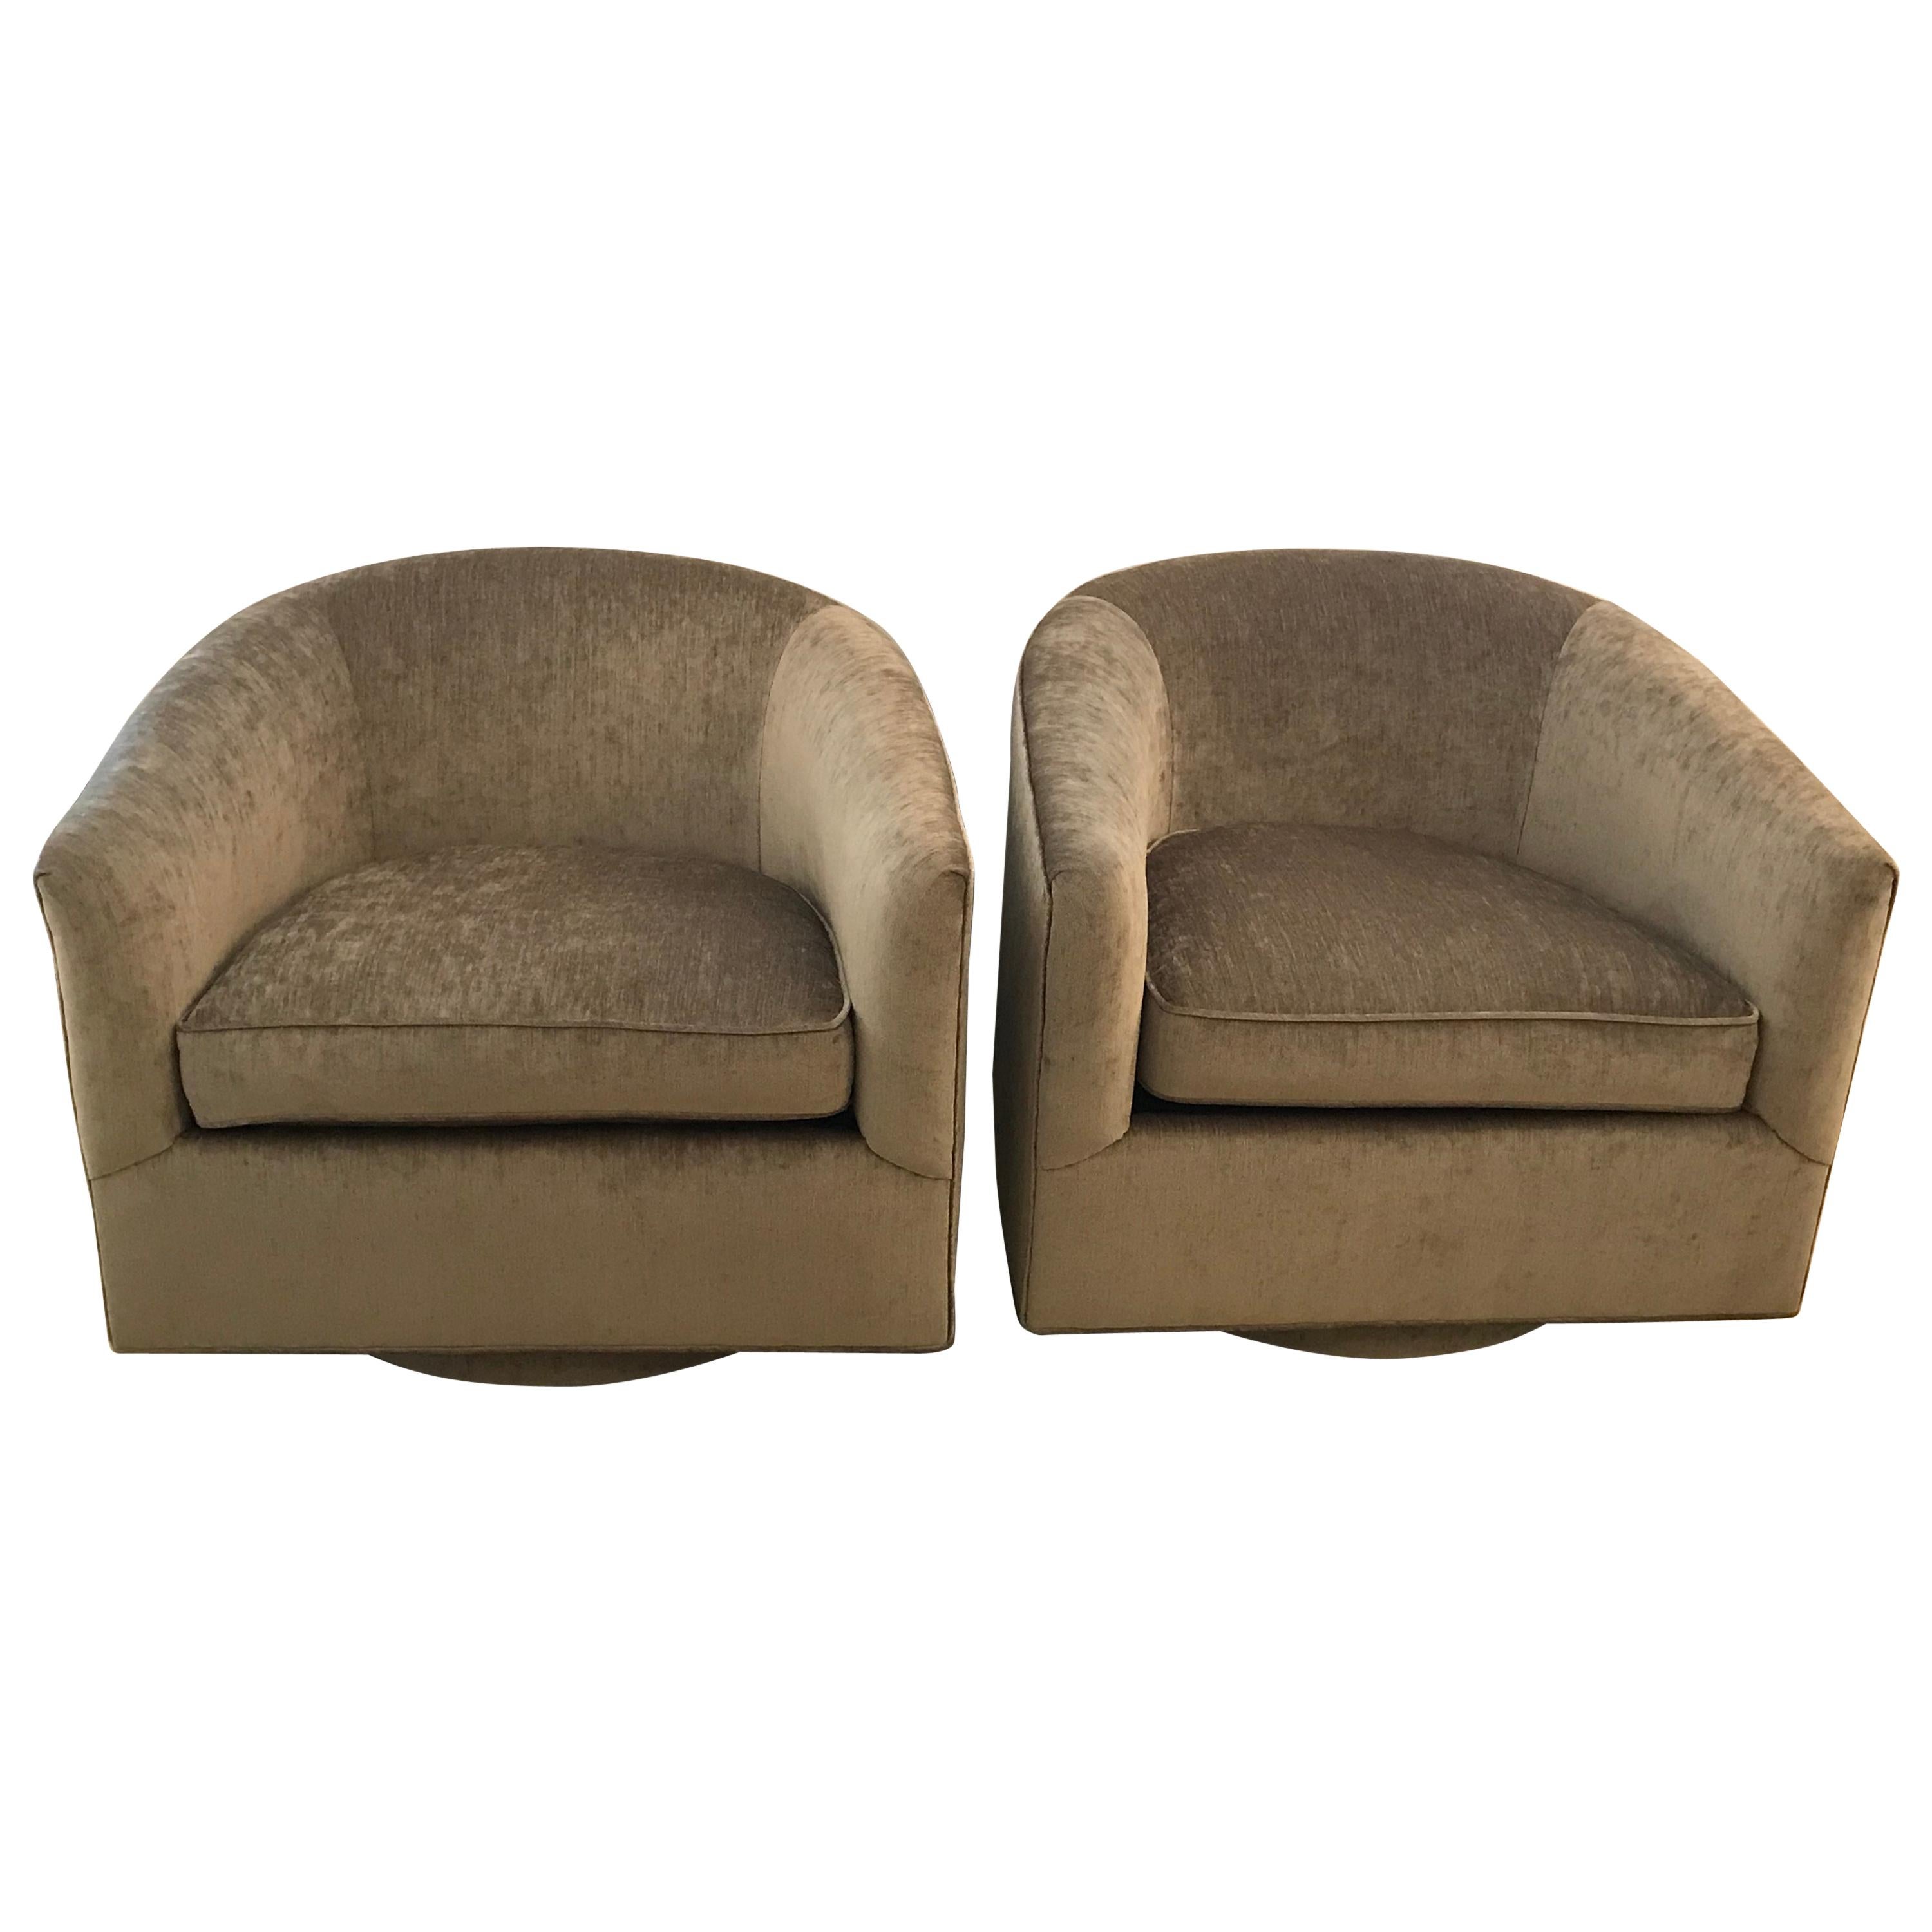 Pair of Mid-Century Modern Milo Baughman Style Swivel Chairs